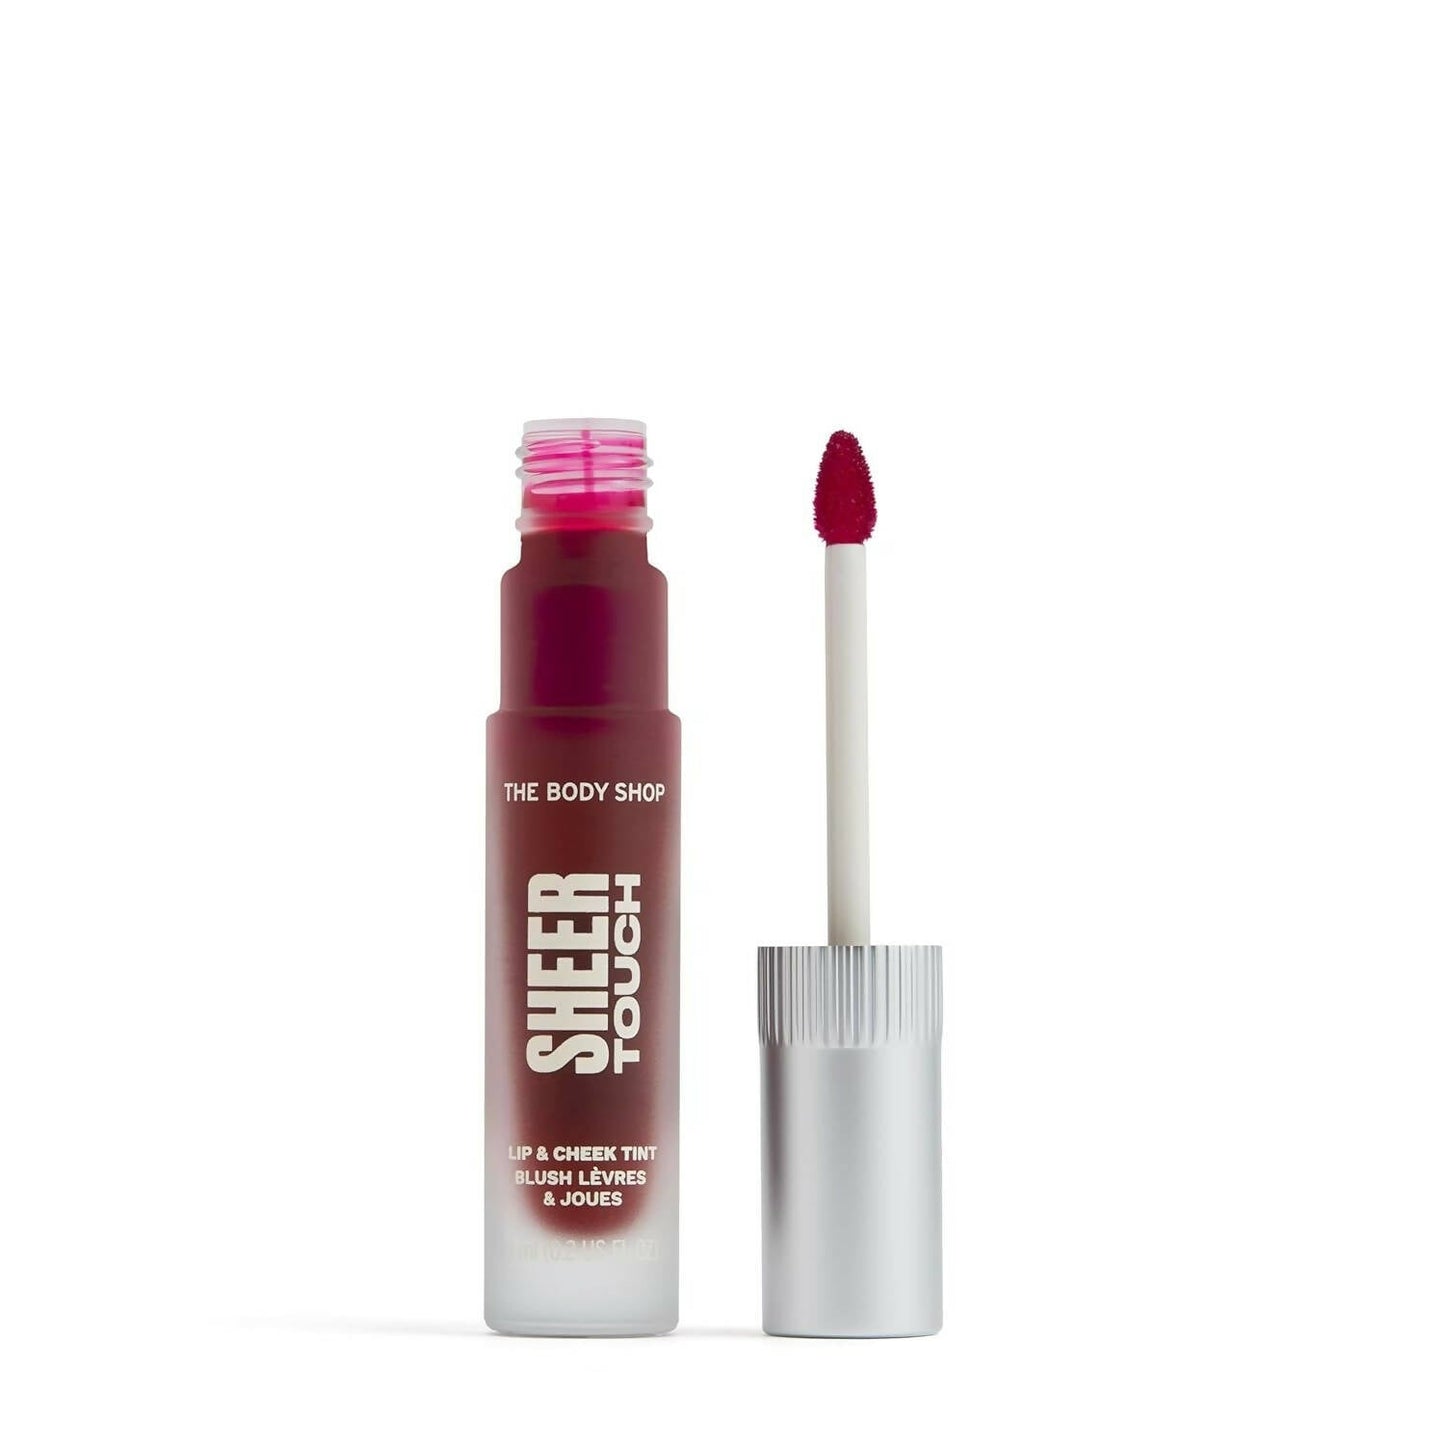 The Body Shop Sheer Touch Lip & Cheek Tint- Bloom